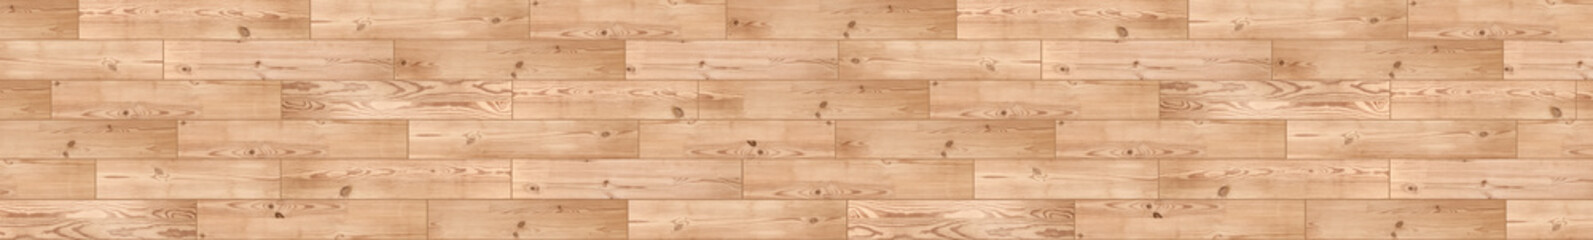 Wood floor texture. Wooden parquet. Flooring. Natural wooden background.